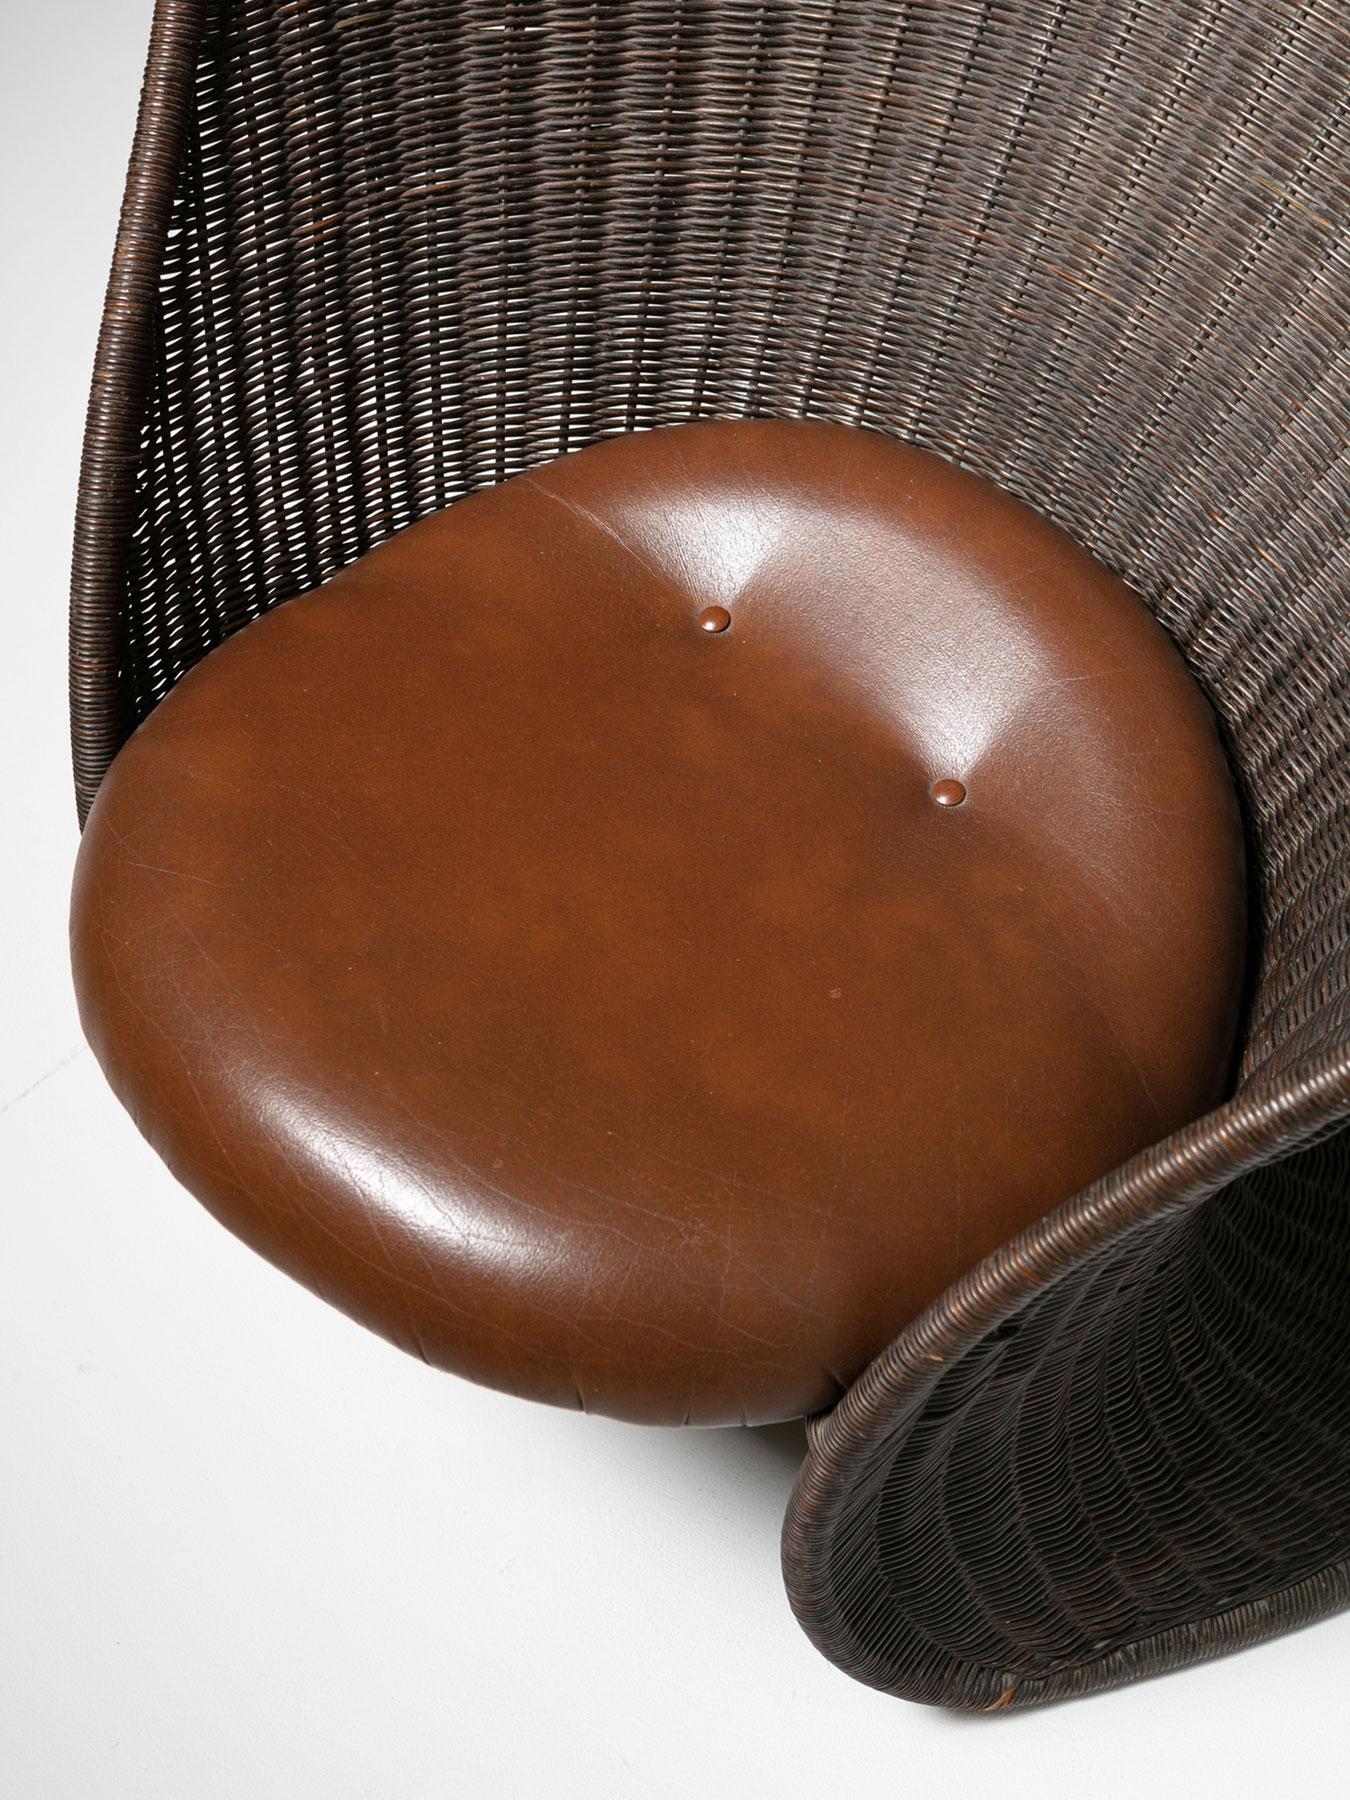 Wicker Foglia Lounge Chair by Travasa for Bonacina